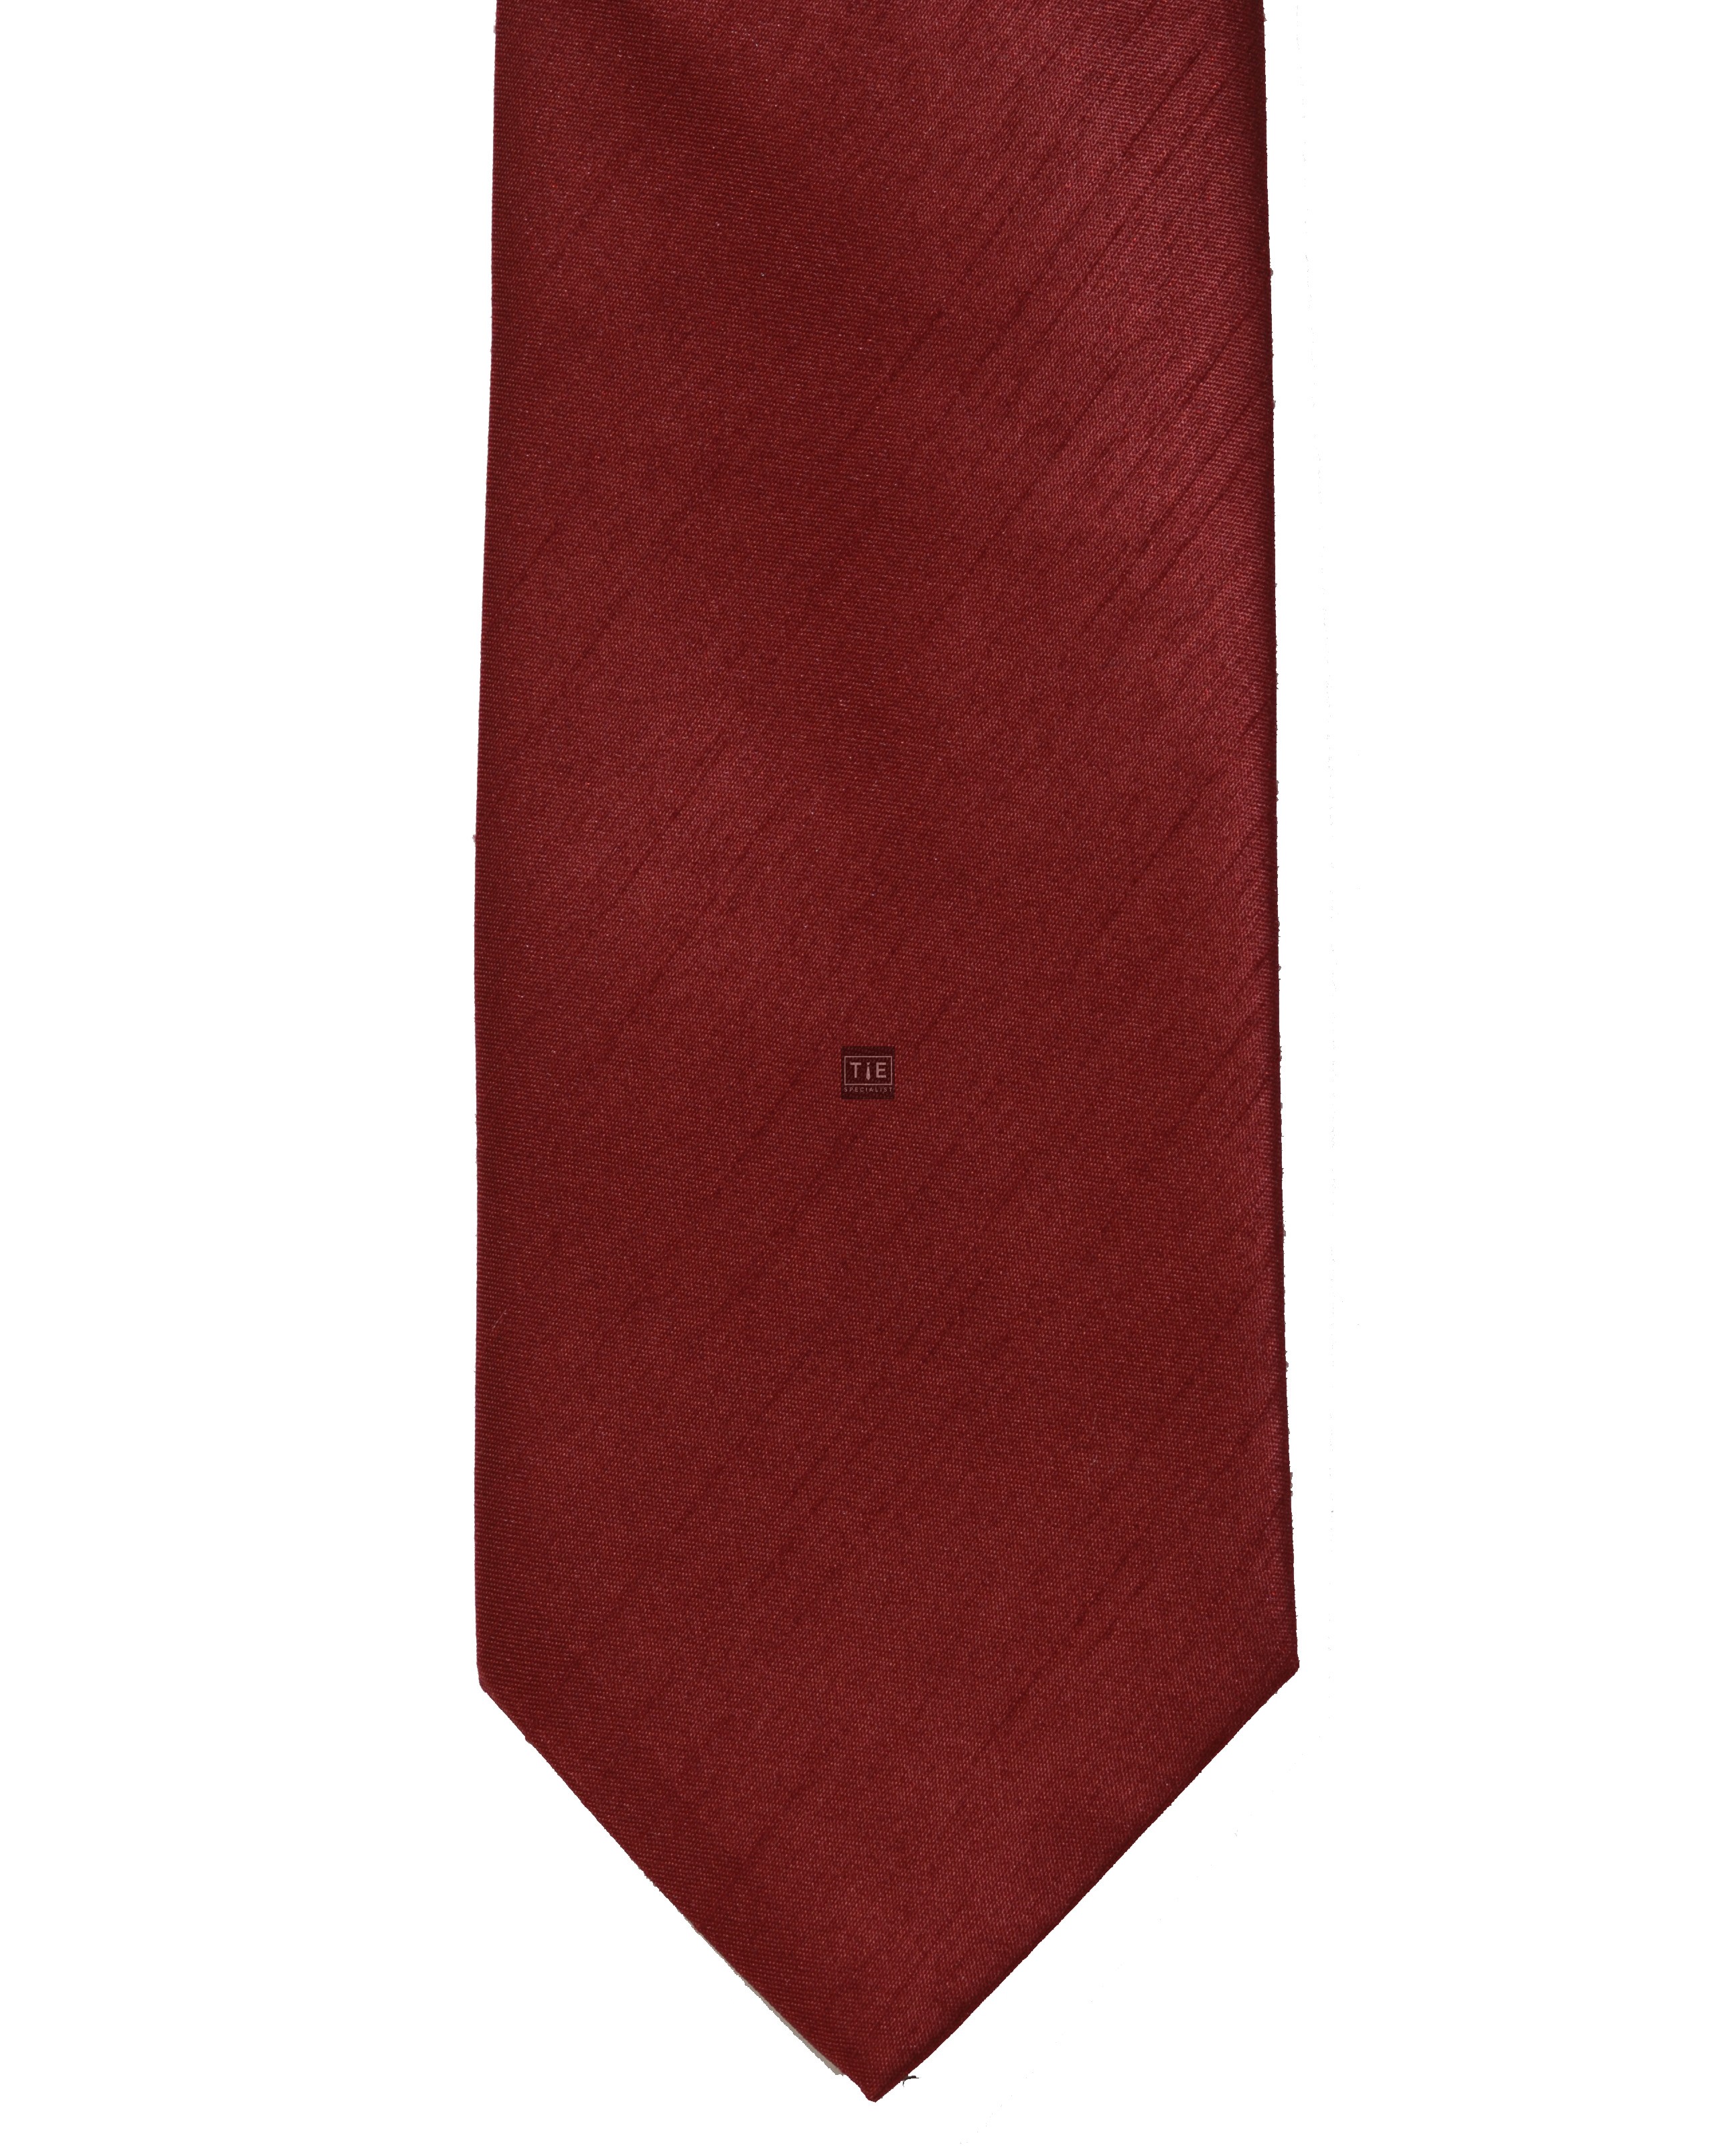 Red Shantung Tie and Pocket Hankie